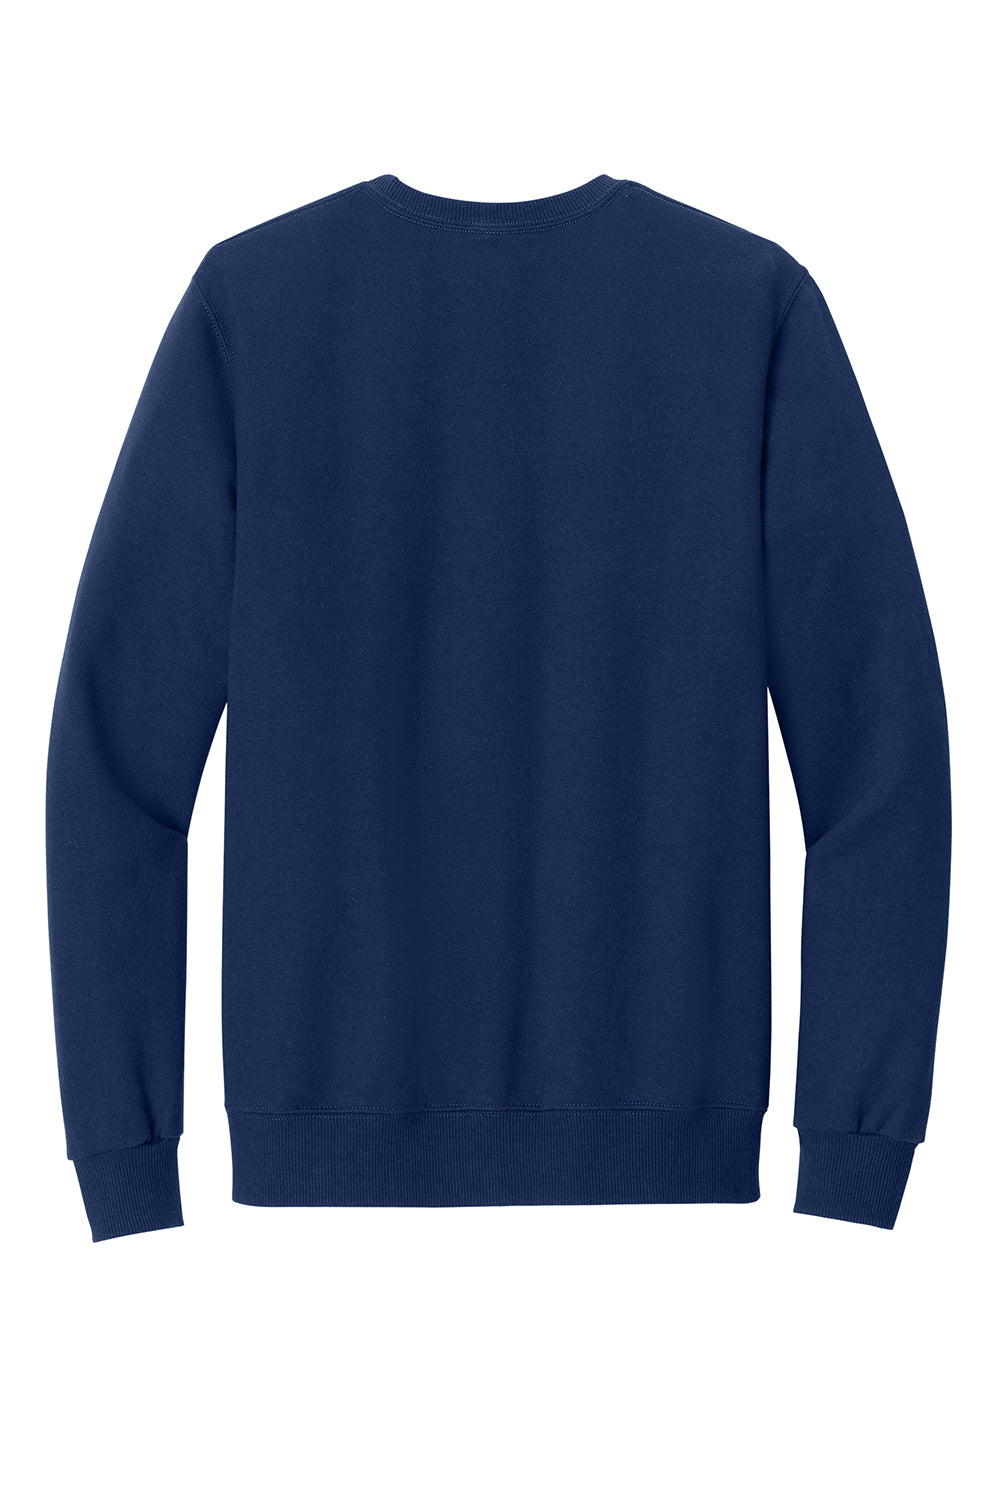 Jerzees 701M Mens Eco Premium Crewneck Sweatshirt Navy Blue Flat Back